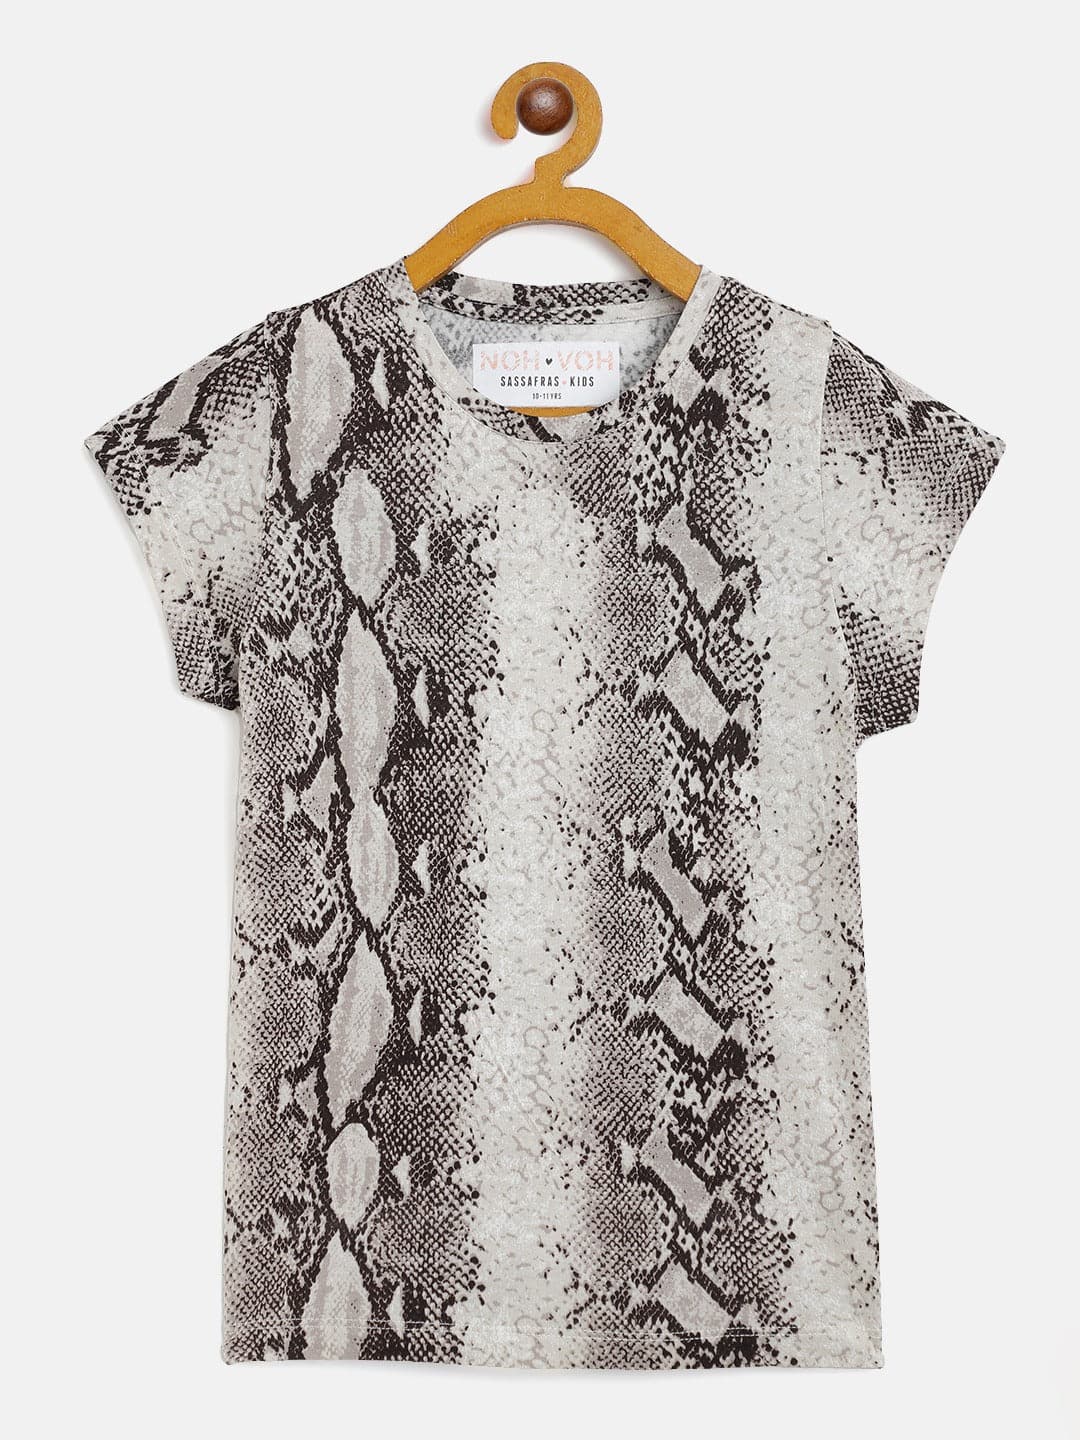 Girls Beige Python Print T-Shirt-Girls T-Shirts-SASSAFRAS